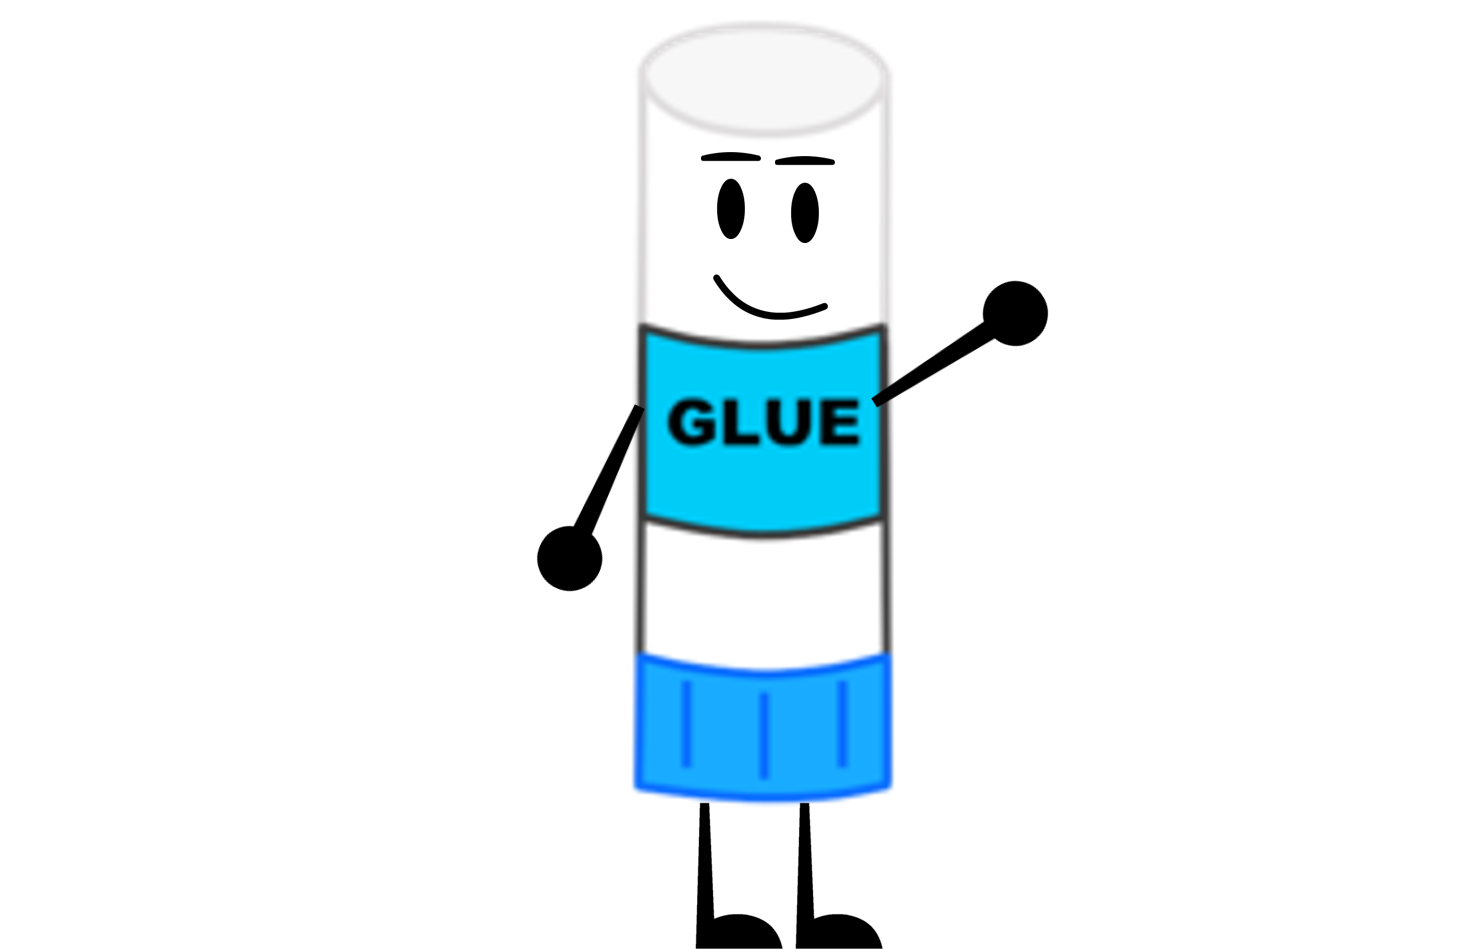 Download Glue Free Clipart HD HQ PNG Image FreePNGImg.